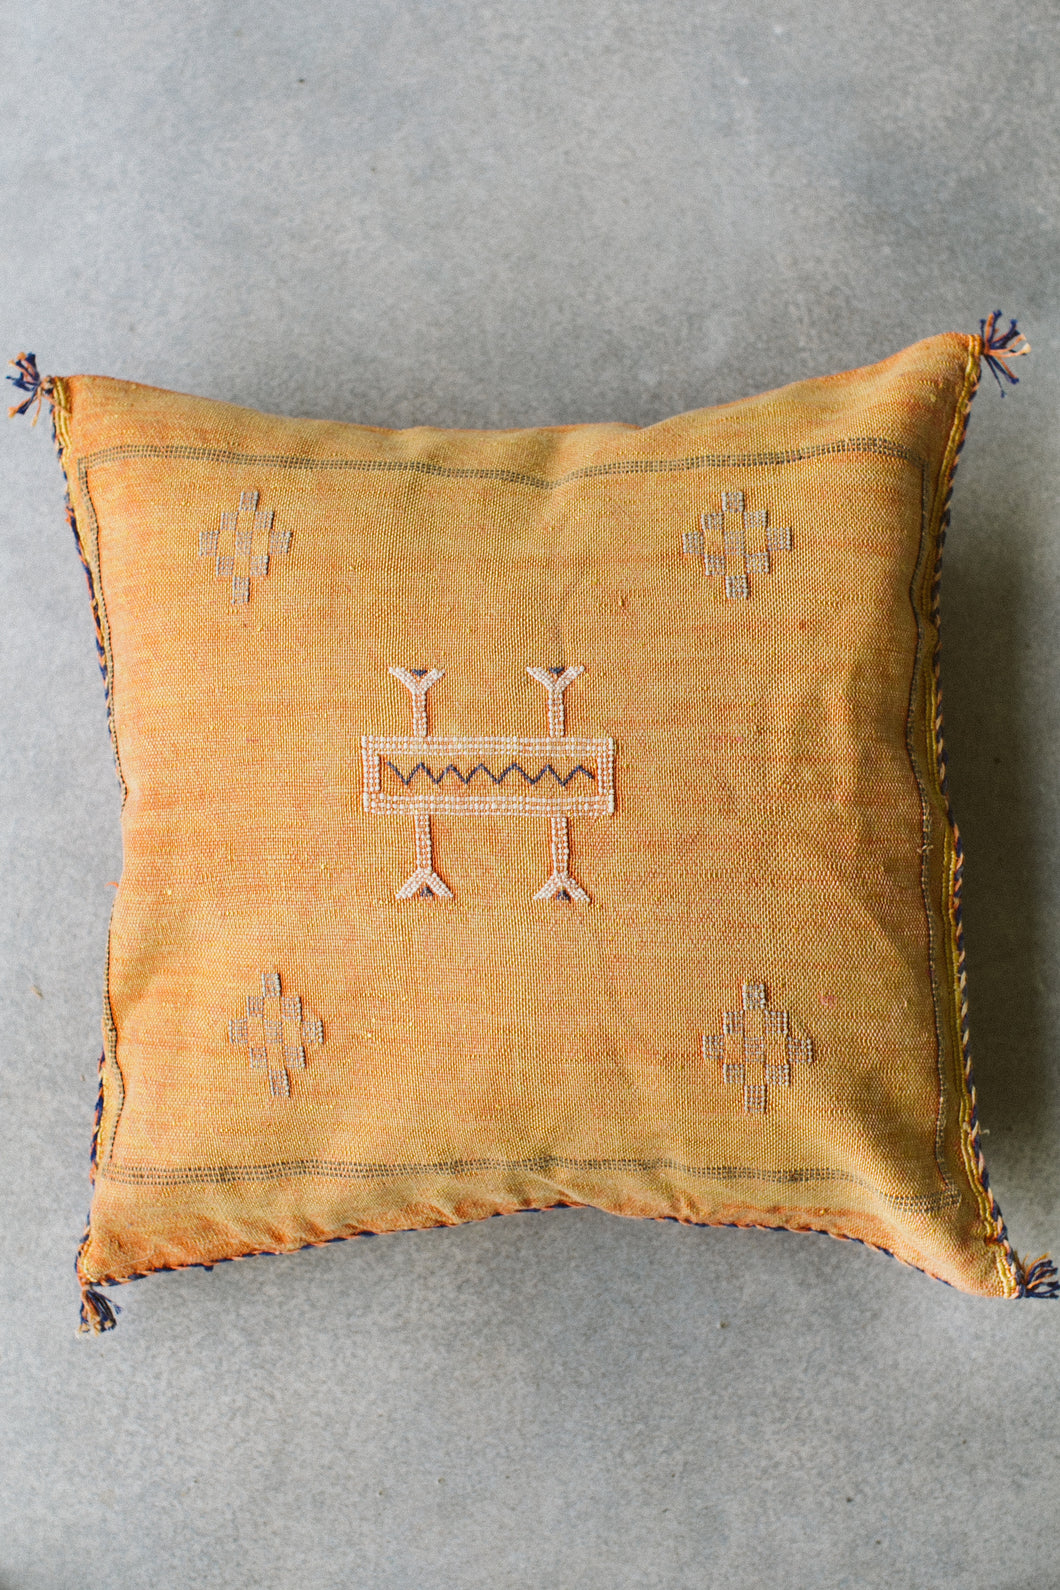 Cactus Silk Pillow - Light Orange with Light Embroidery